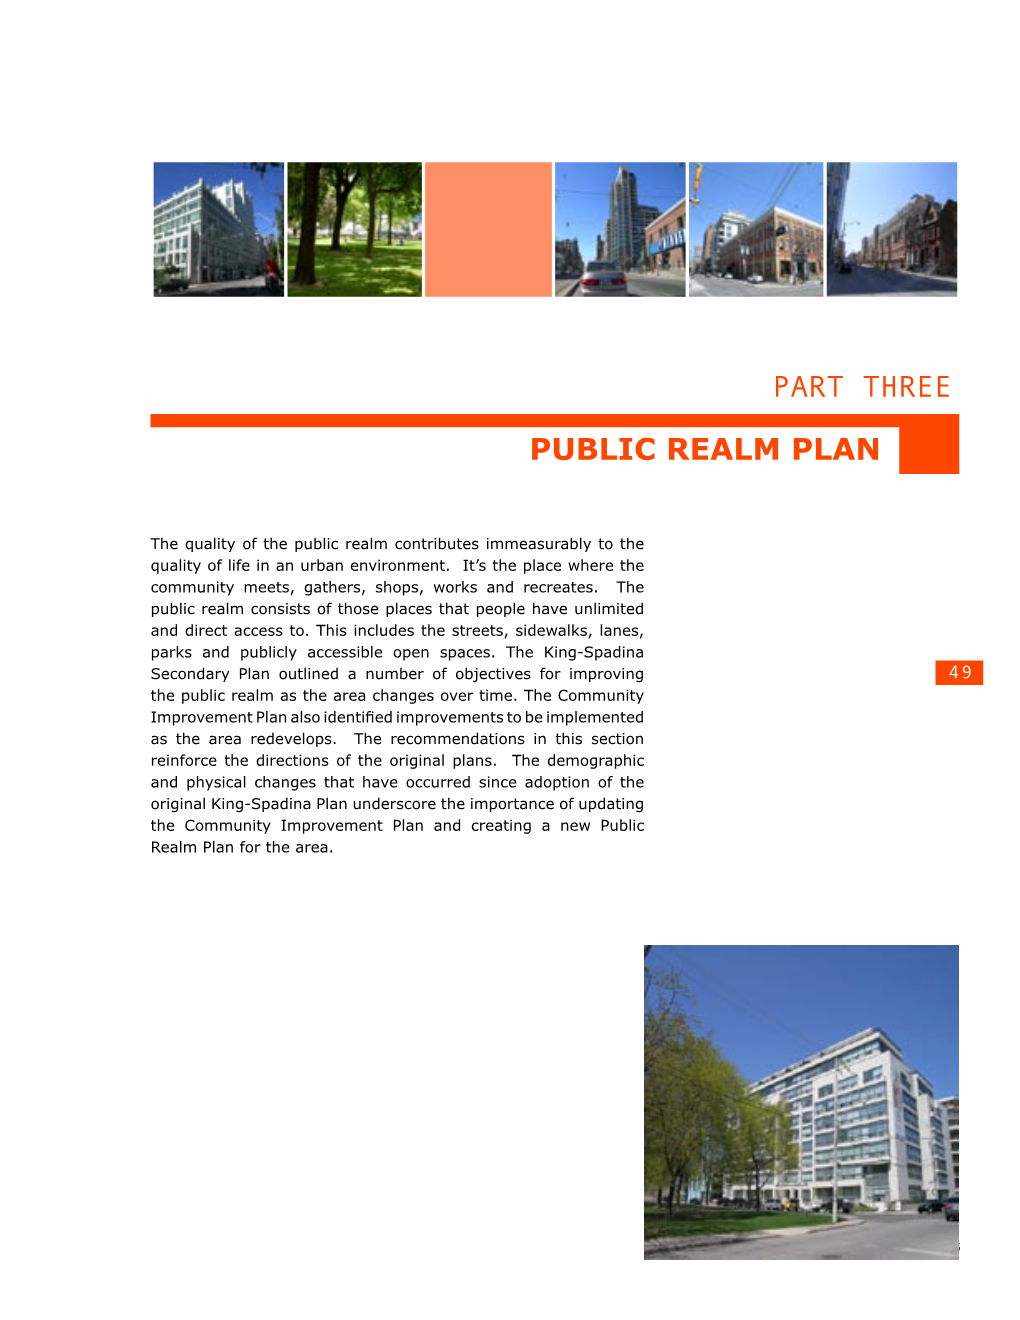 Public Realm Plan